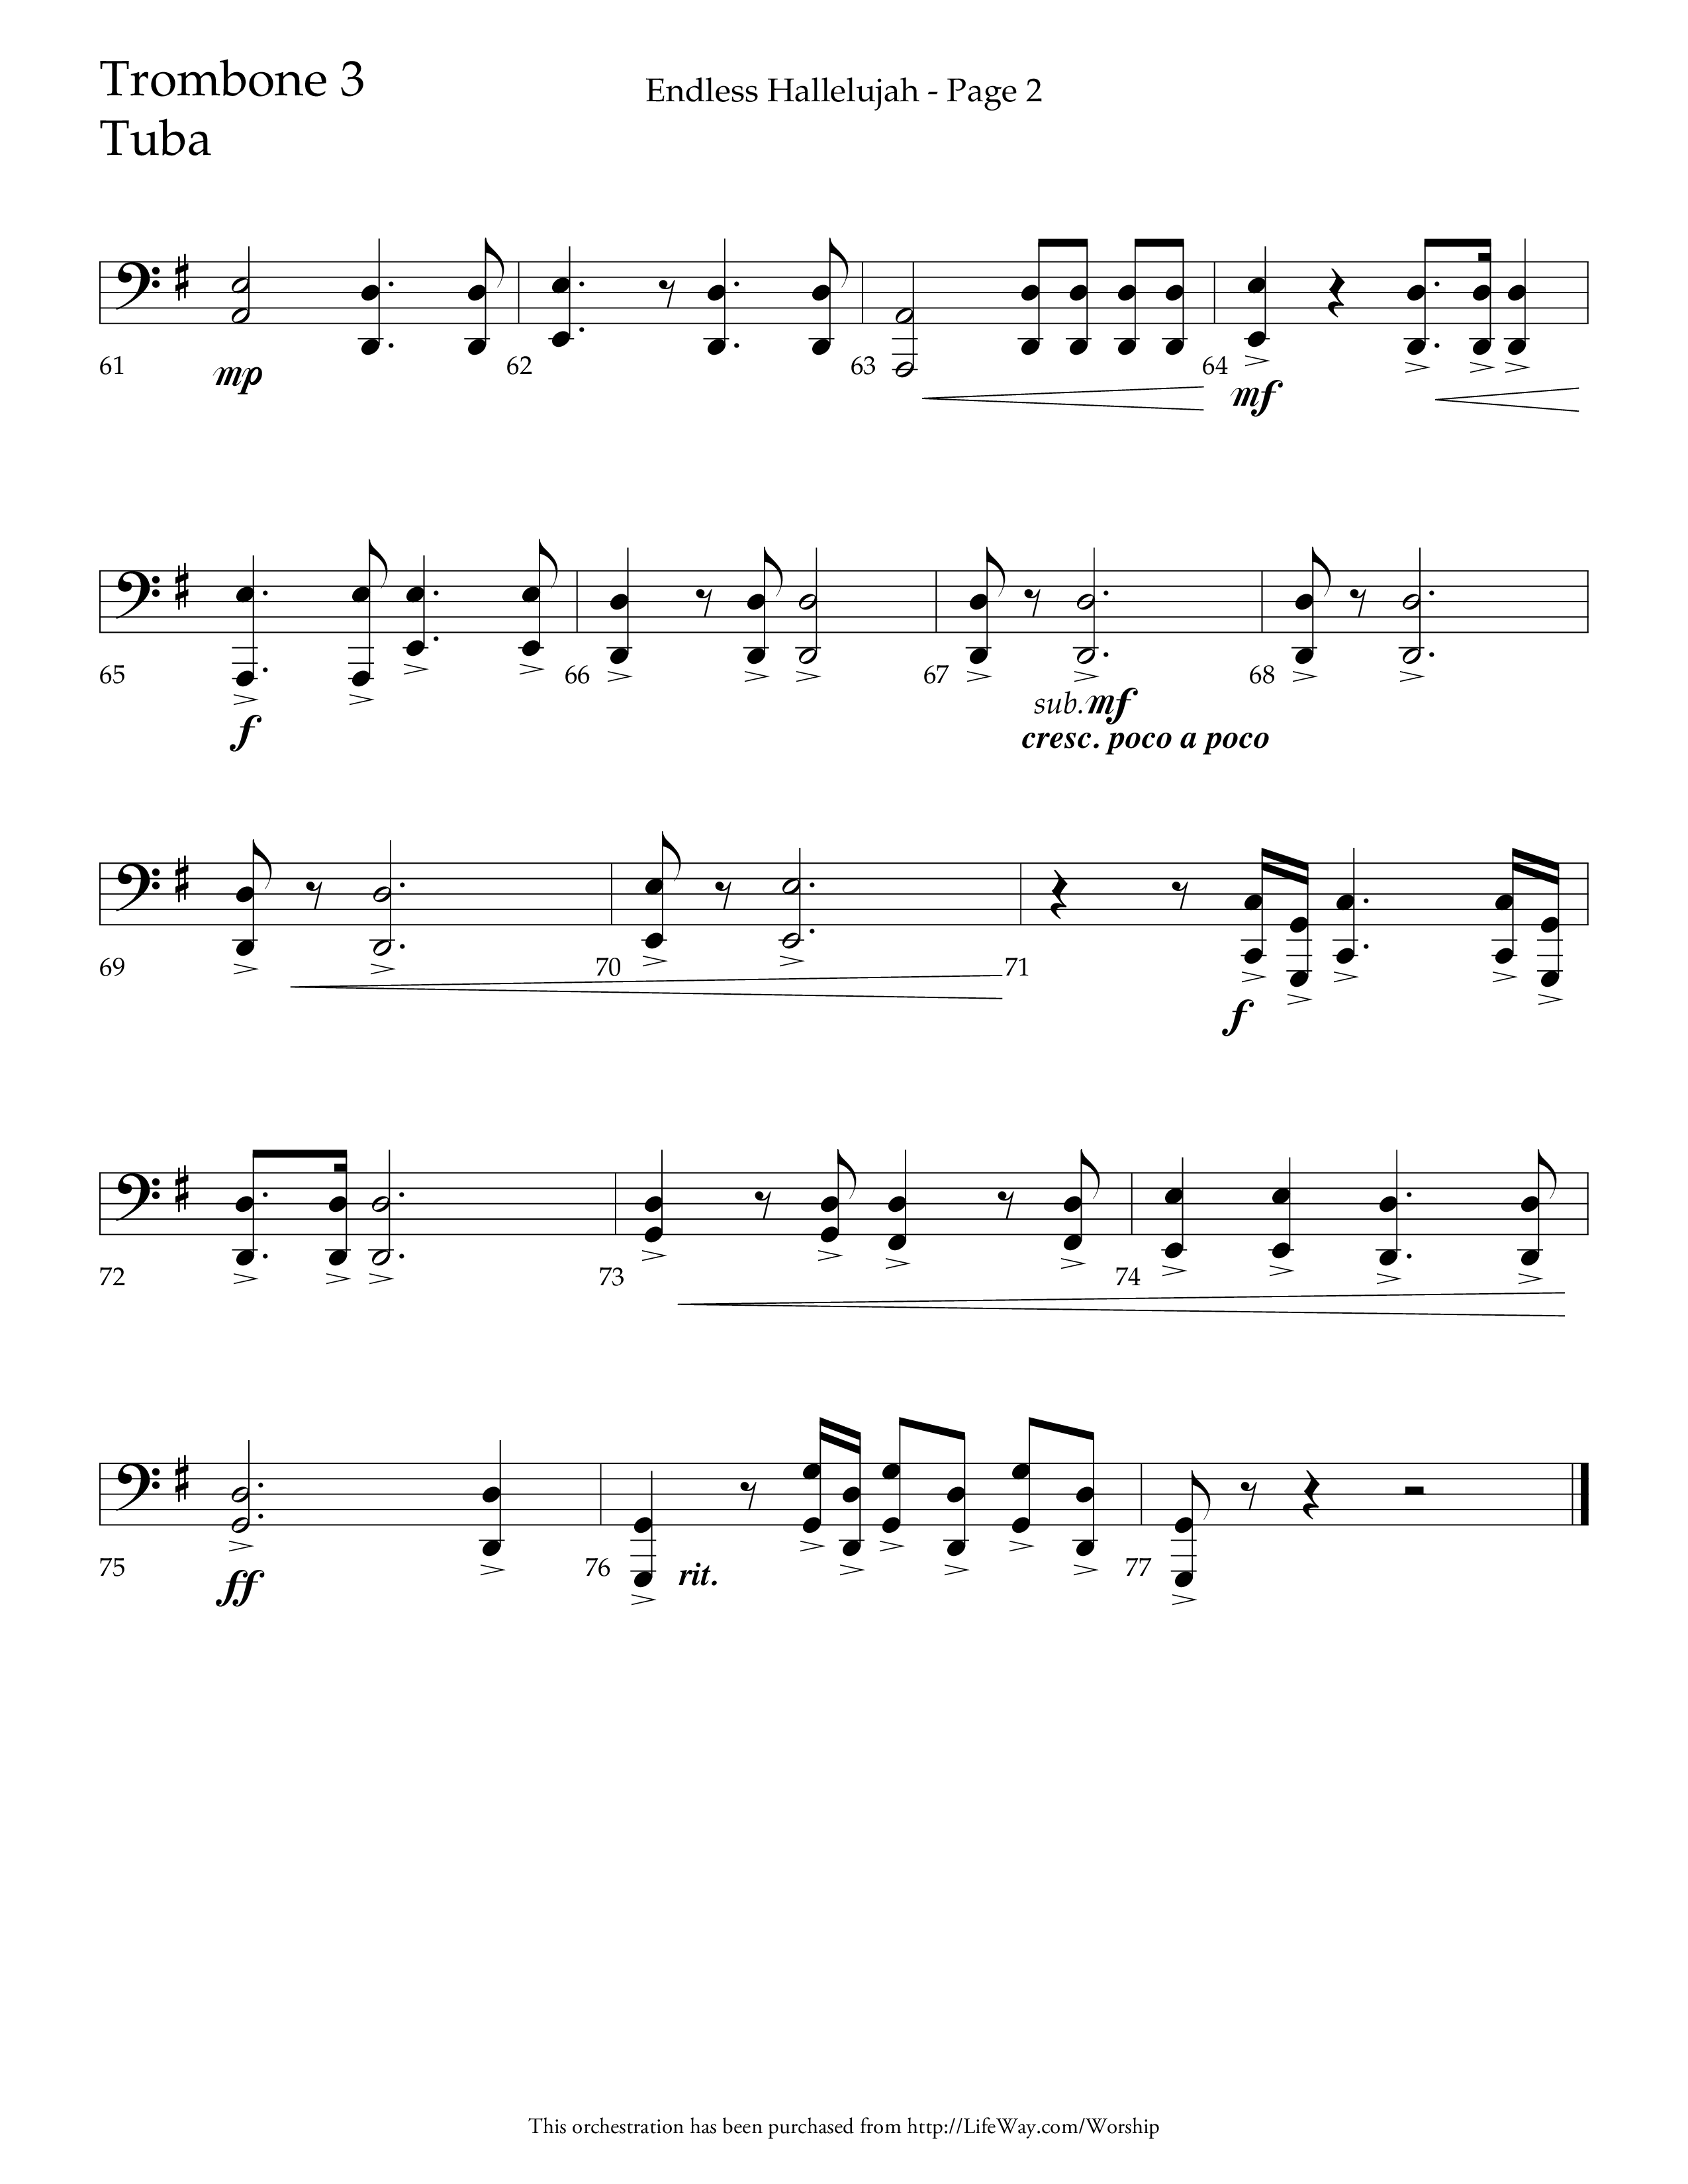 Endless Hallelujah (Choral Anthem SATB) Trombone 3/Tuba (Lifeway Choral / Arr. Tom Fettke / Arr. Thomas Grassi / Orch. Michael Lawrence)